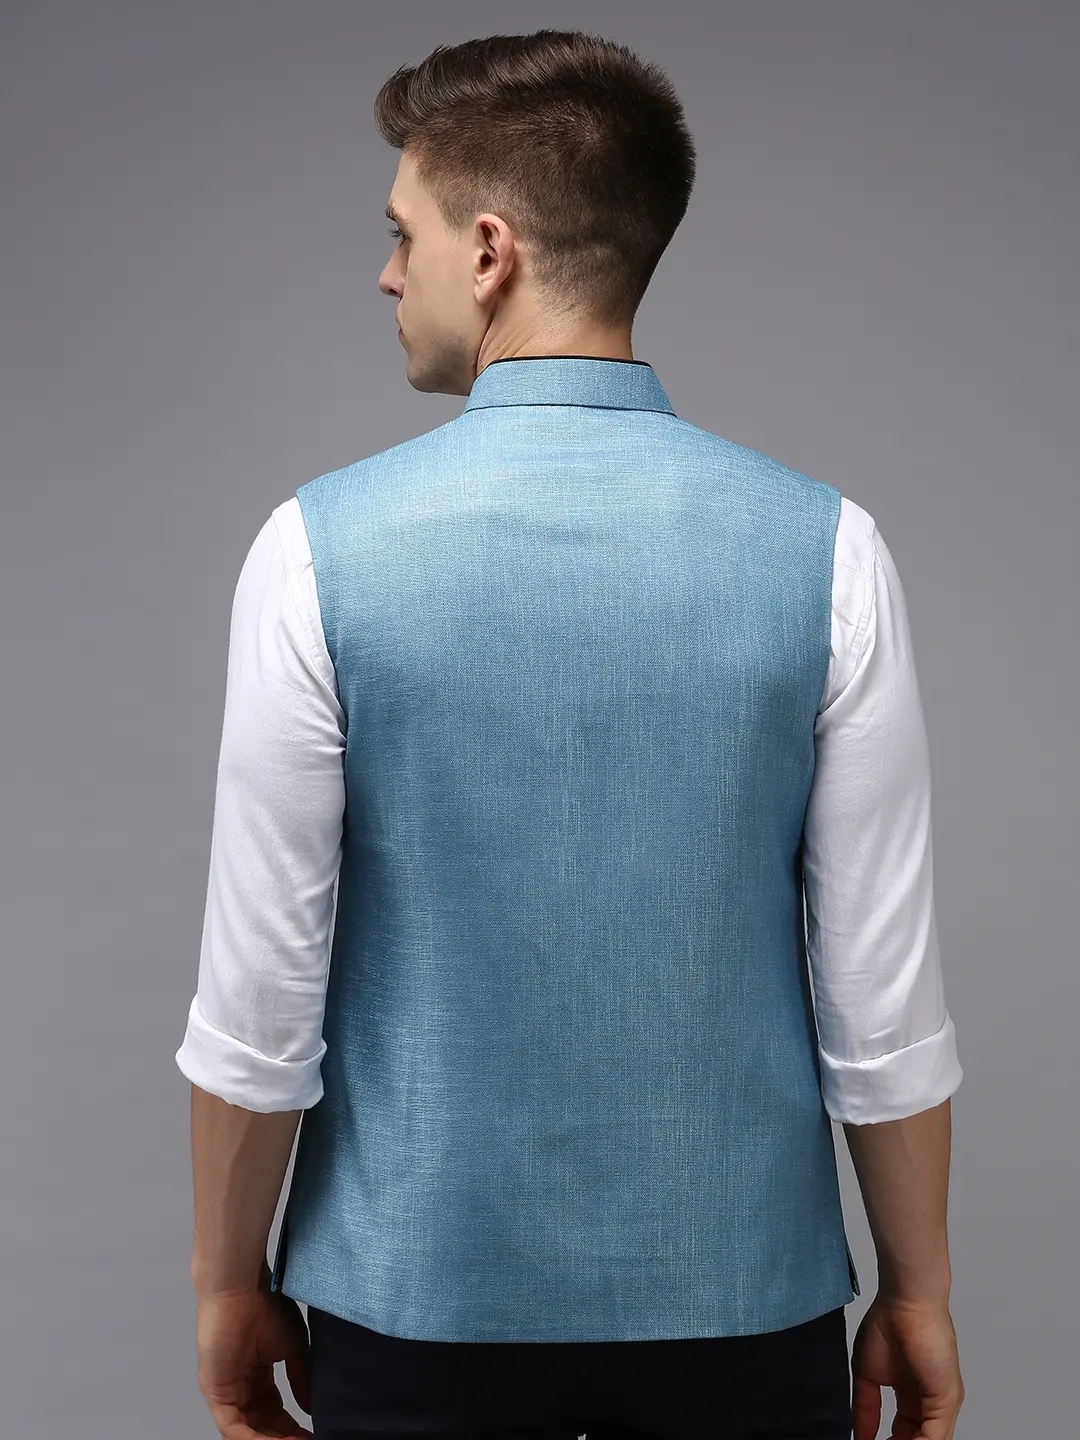 Men's Blue Cotton Blend Solid Comfort Fit Ethnic Jackets